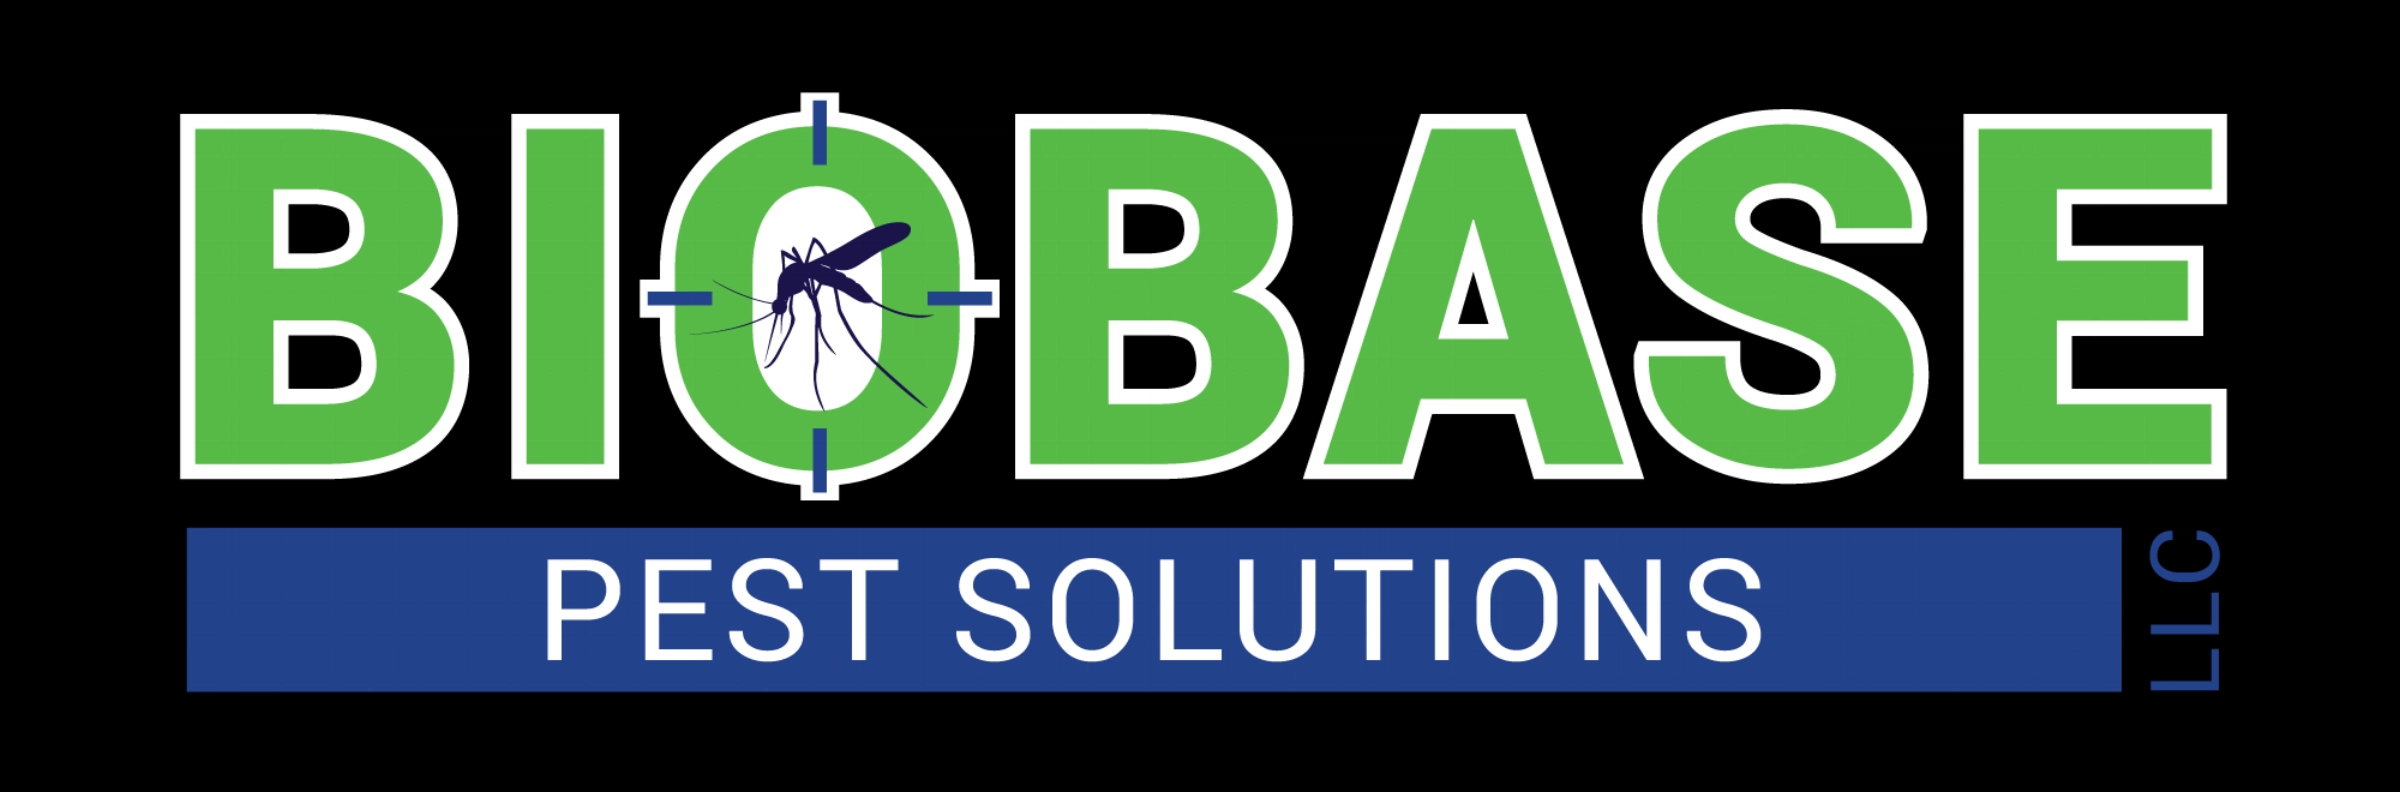 BioBase Pest Solutions, LLC Logo